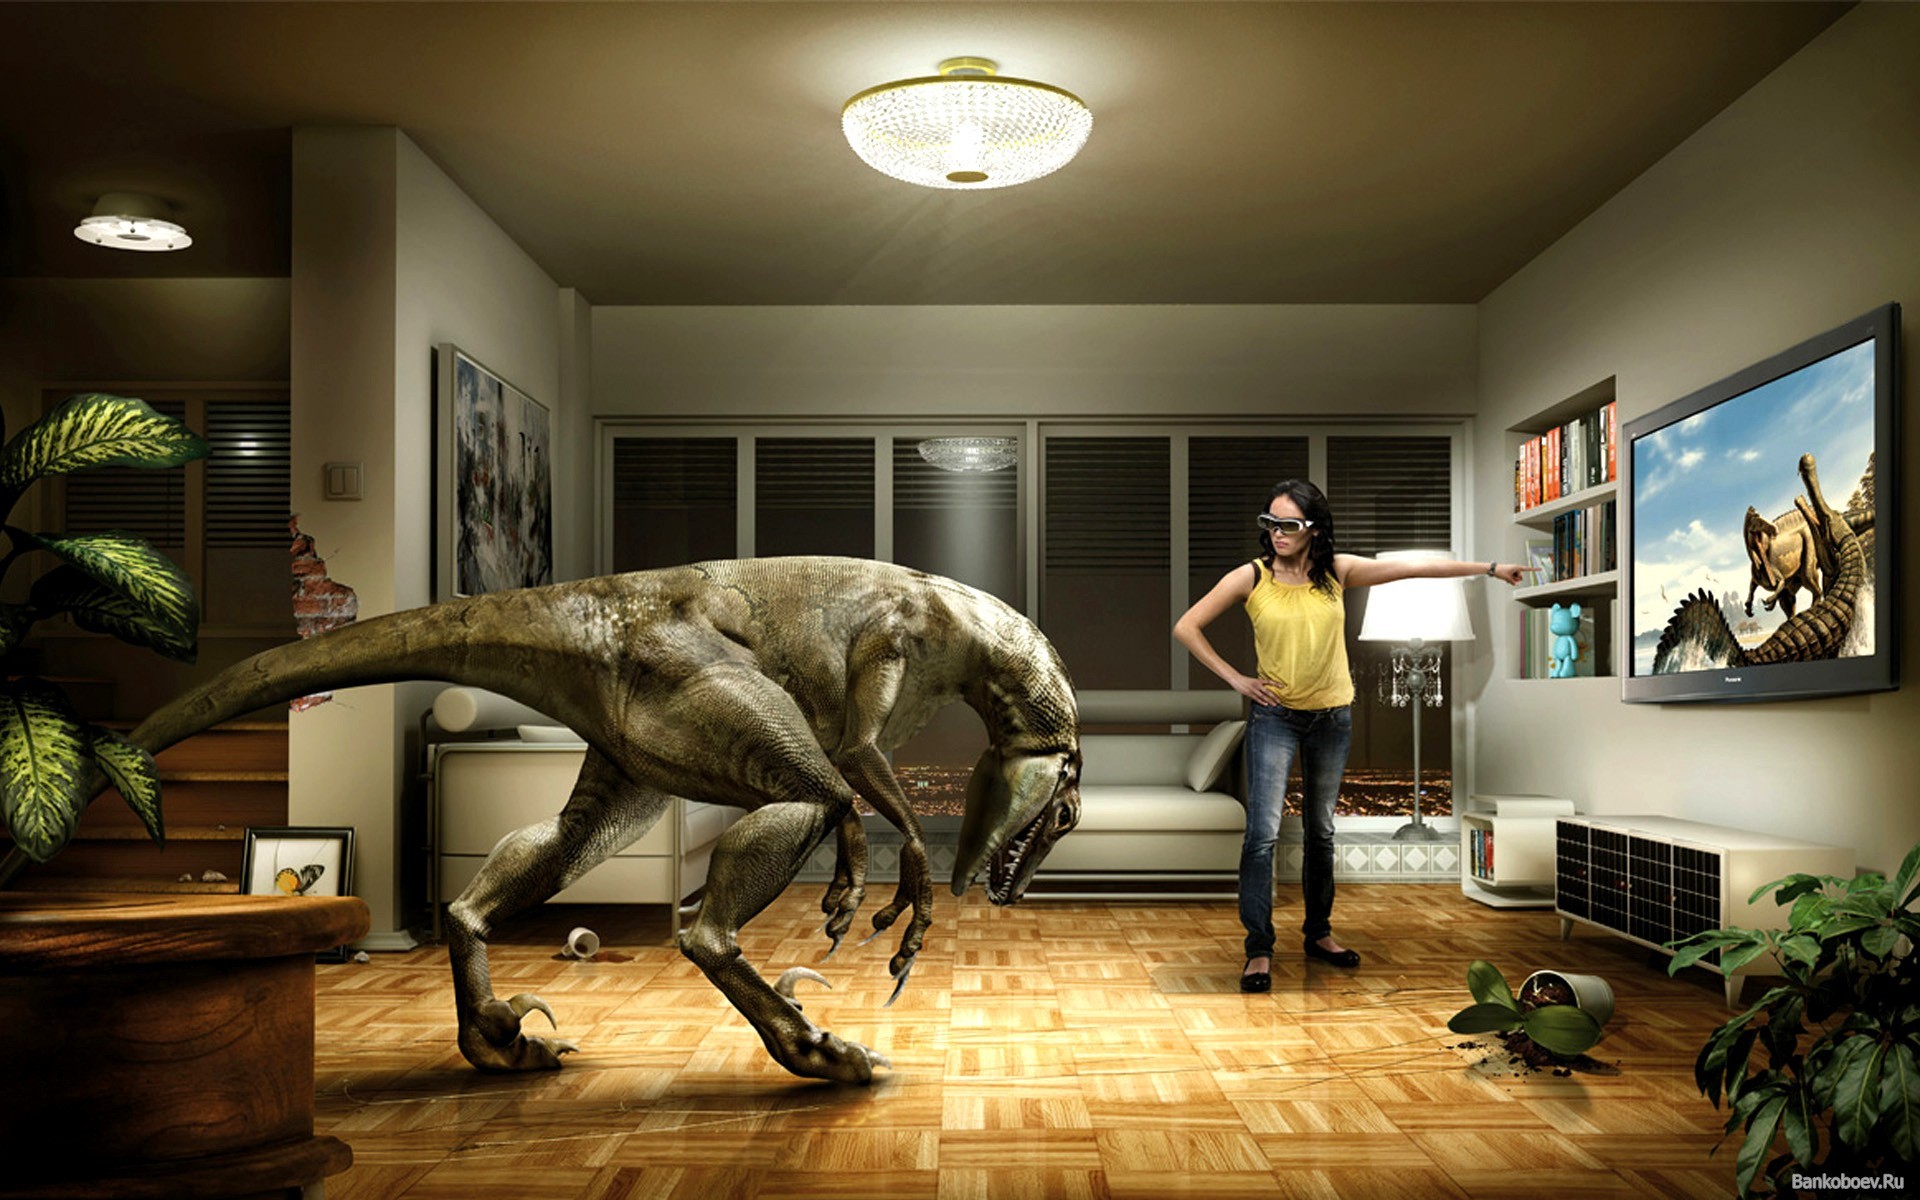 Dinosaurs Room TV Virtual Reality Headsets Humor Video Games Meta Digital Art 1920x1200